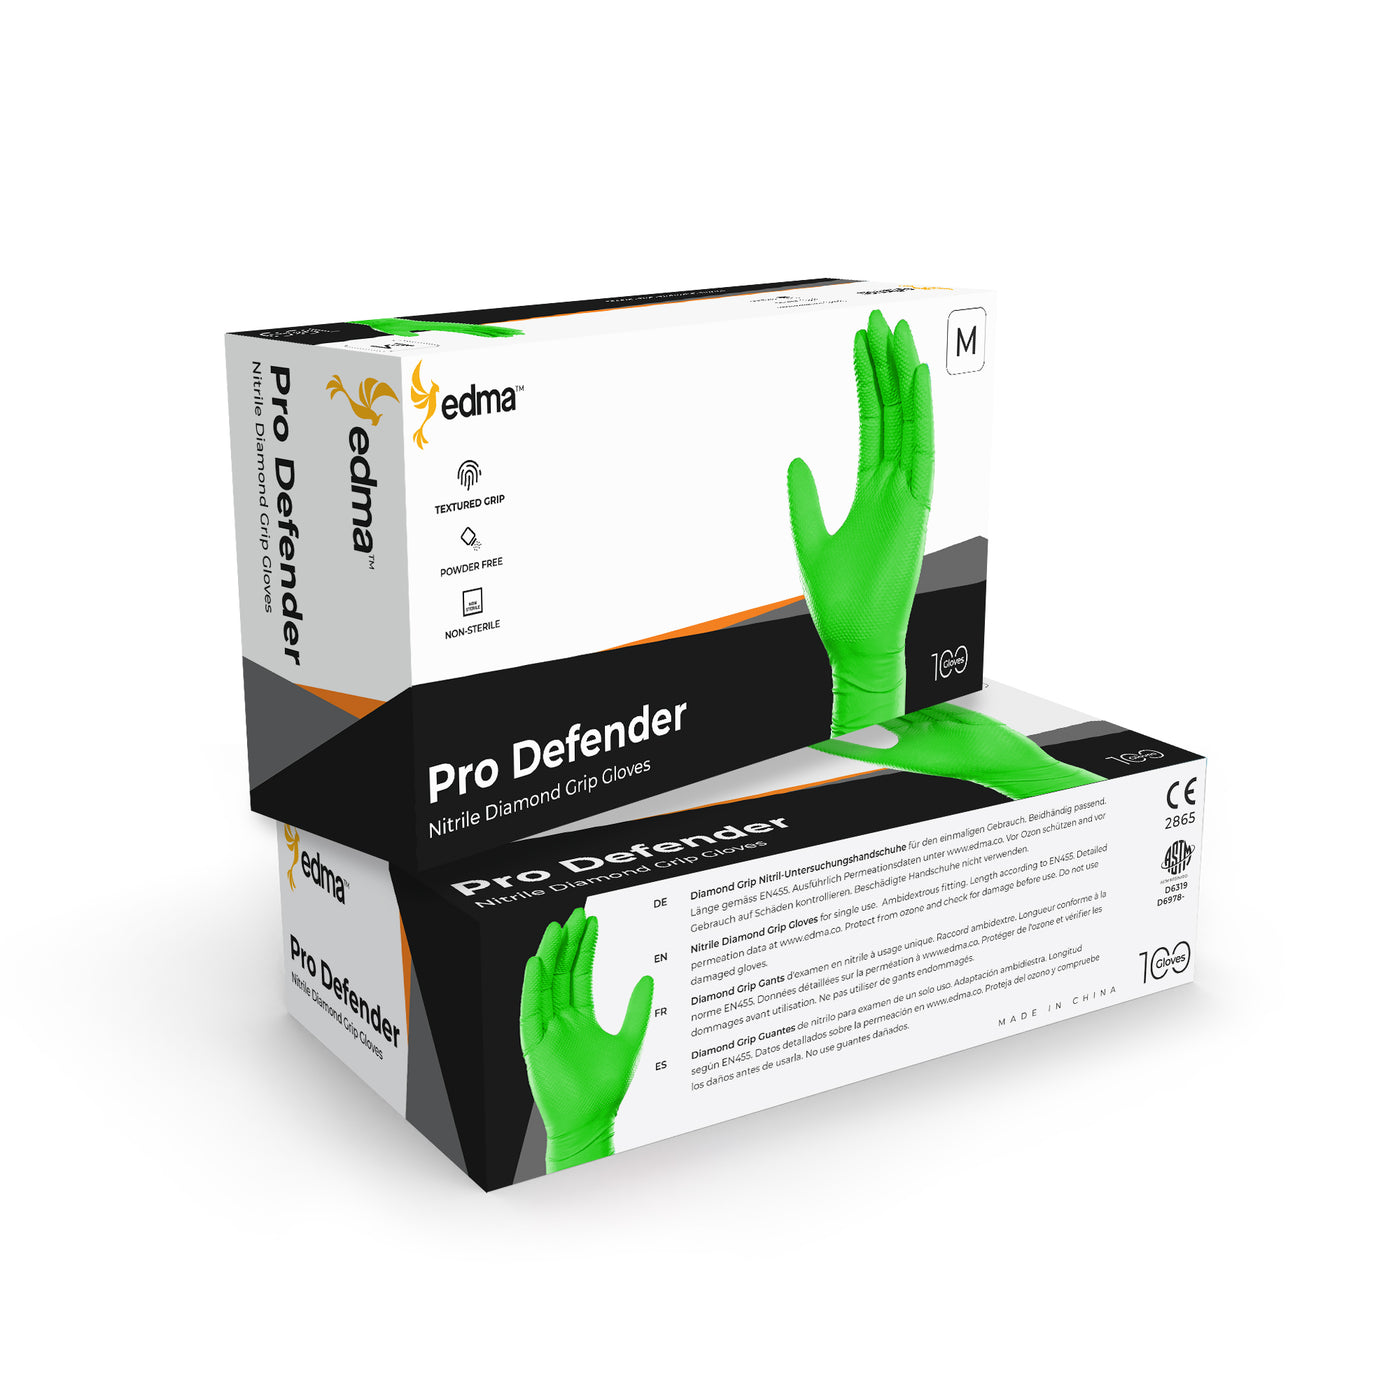 2 Boxes of Edma Pro Defender Green Nitrile Diamond Grip 9mil Gloves #color_green